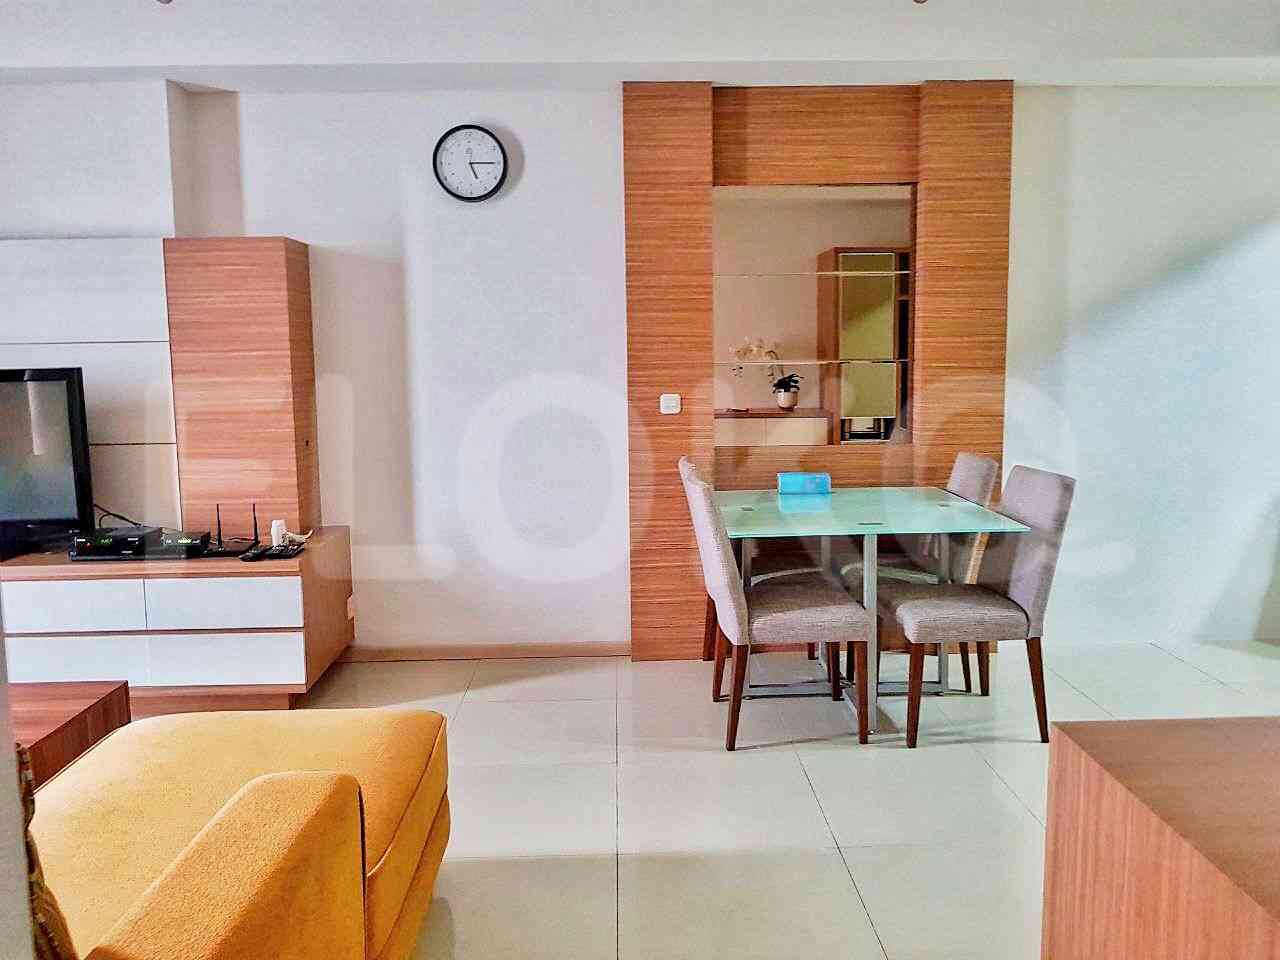 2 Bedroom on 7th Floor for Rent in Kemang Village Residence - fkeb03 4